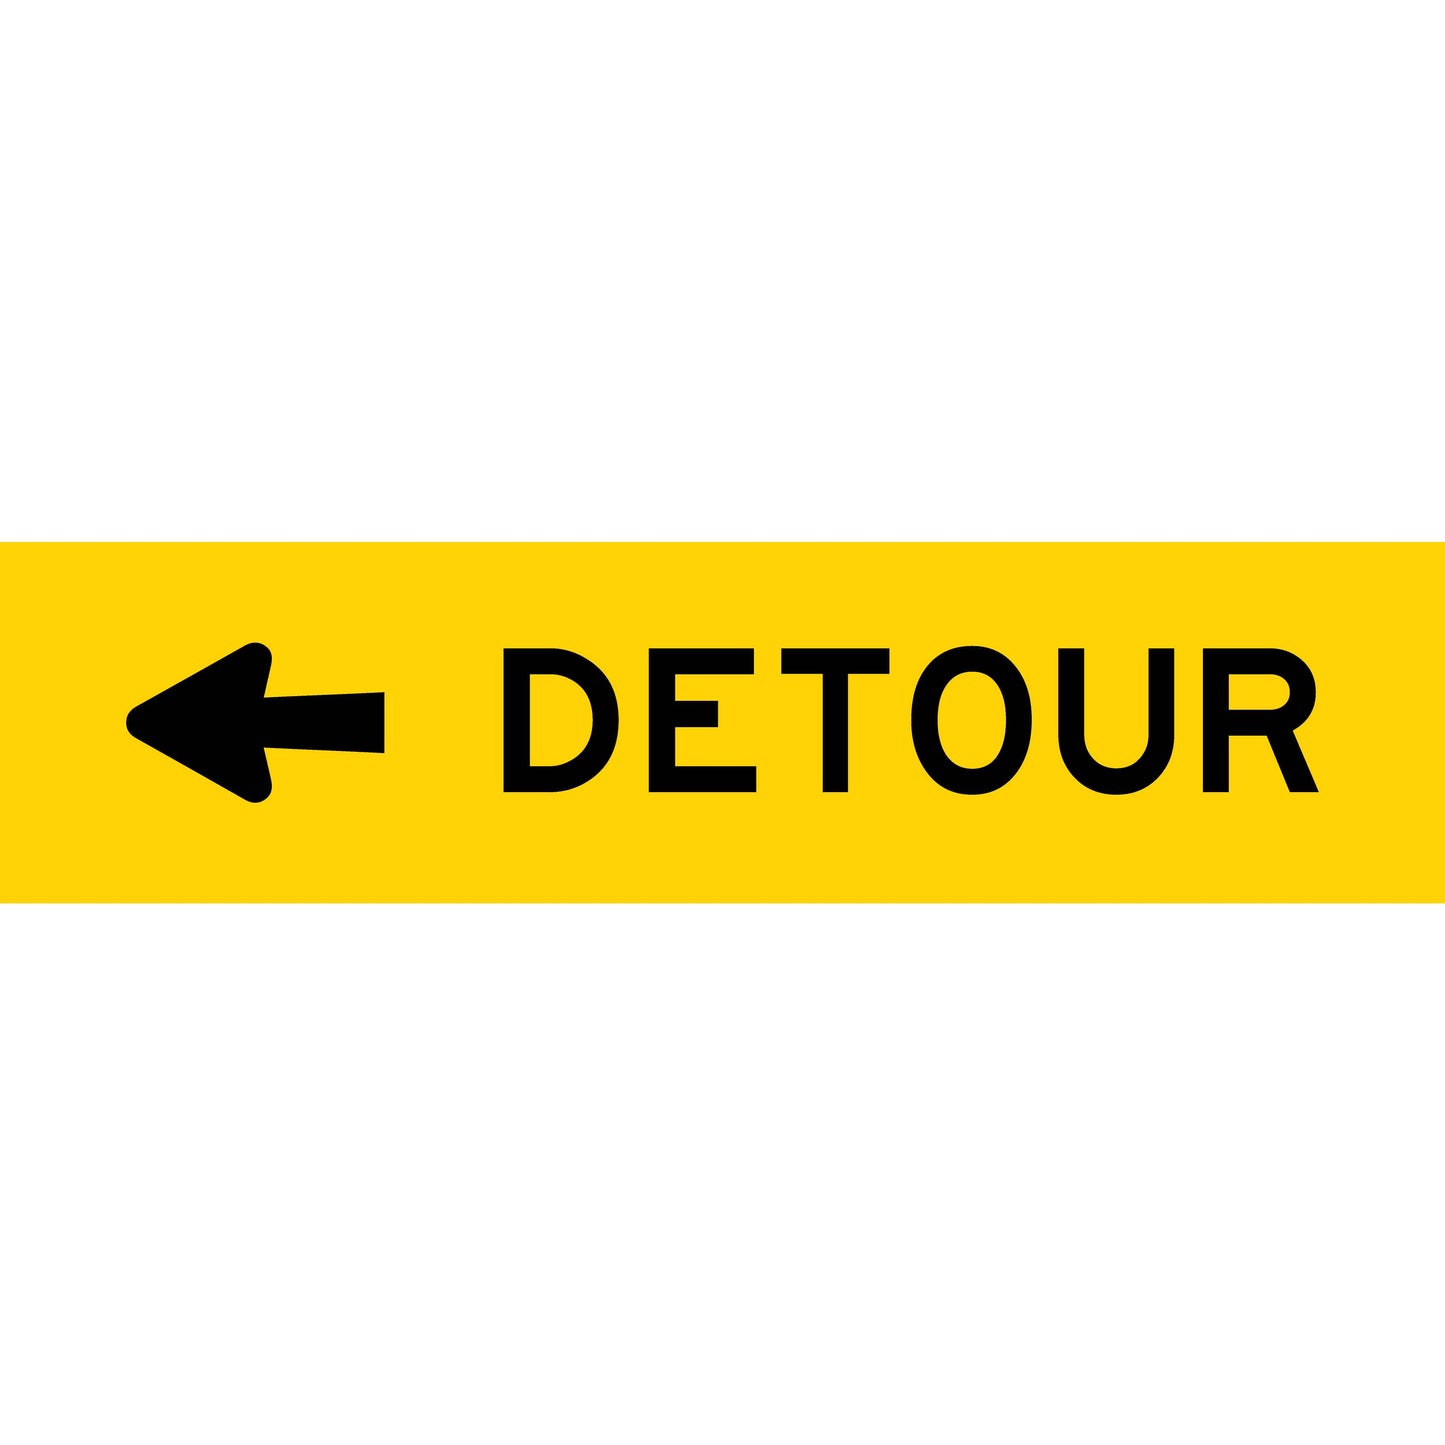 Detour (Arrow Left) Long Skinny Multi Message Reflective Traffic Sign